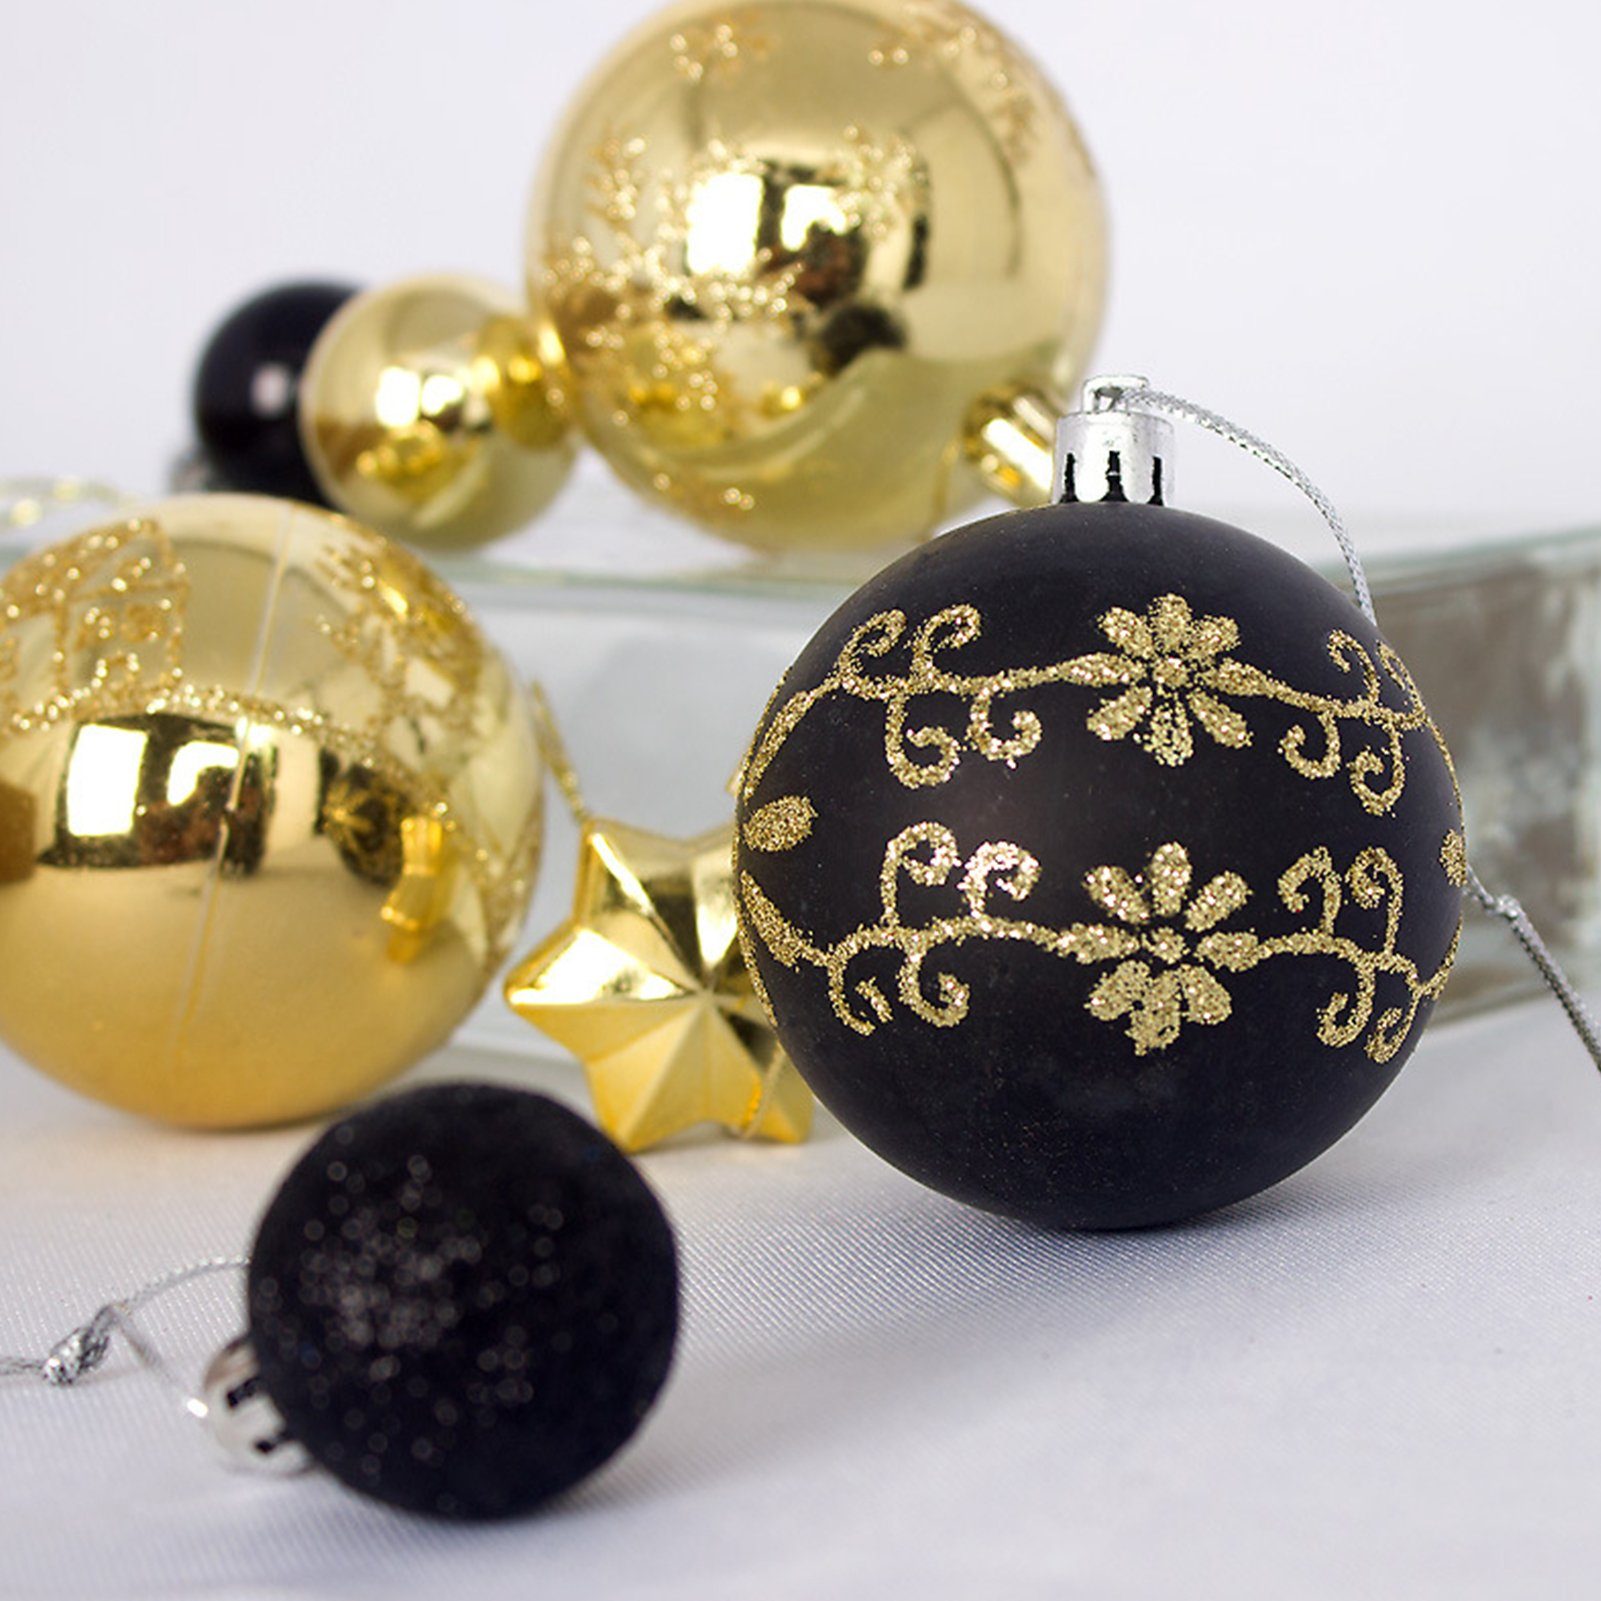 aus Set Weihnachtskugel Weihnachtskugeln, 44 Rot-Weiß-Weihnachtsball-Ornament, Plastik Stück/Set Geschenkbox 3-6cm Farbkugel Weihnachtsbaumkugel Rutaqian